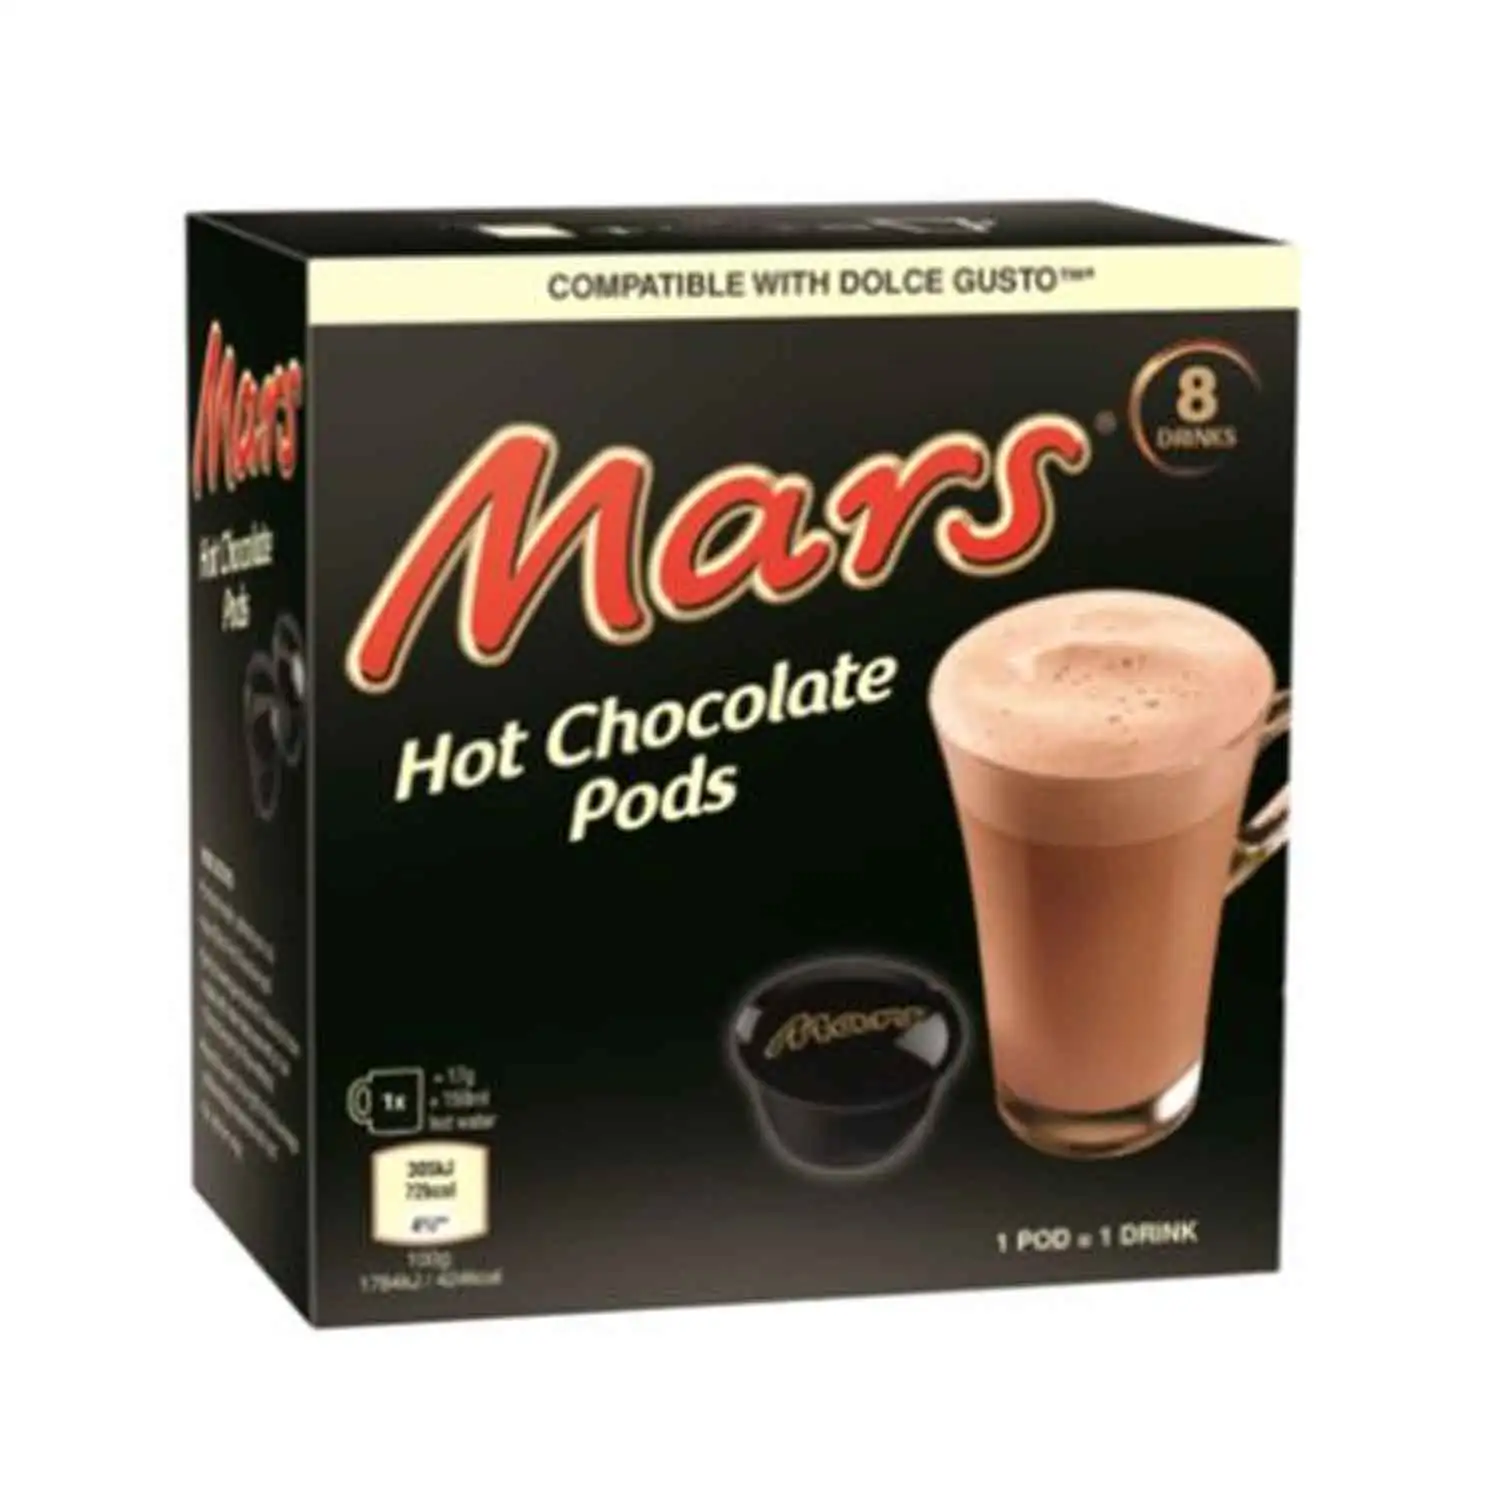 Mars hot chocolate pods 8x15g - Buy at Real Tobacco